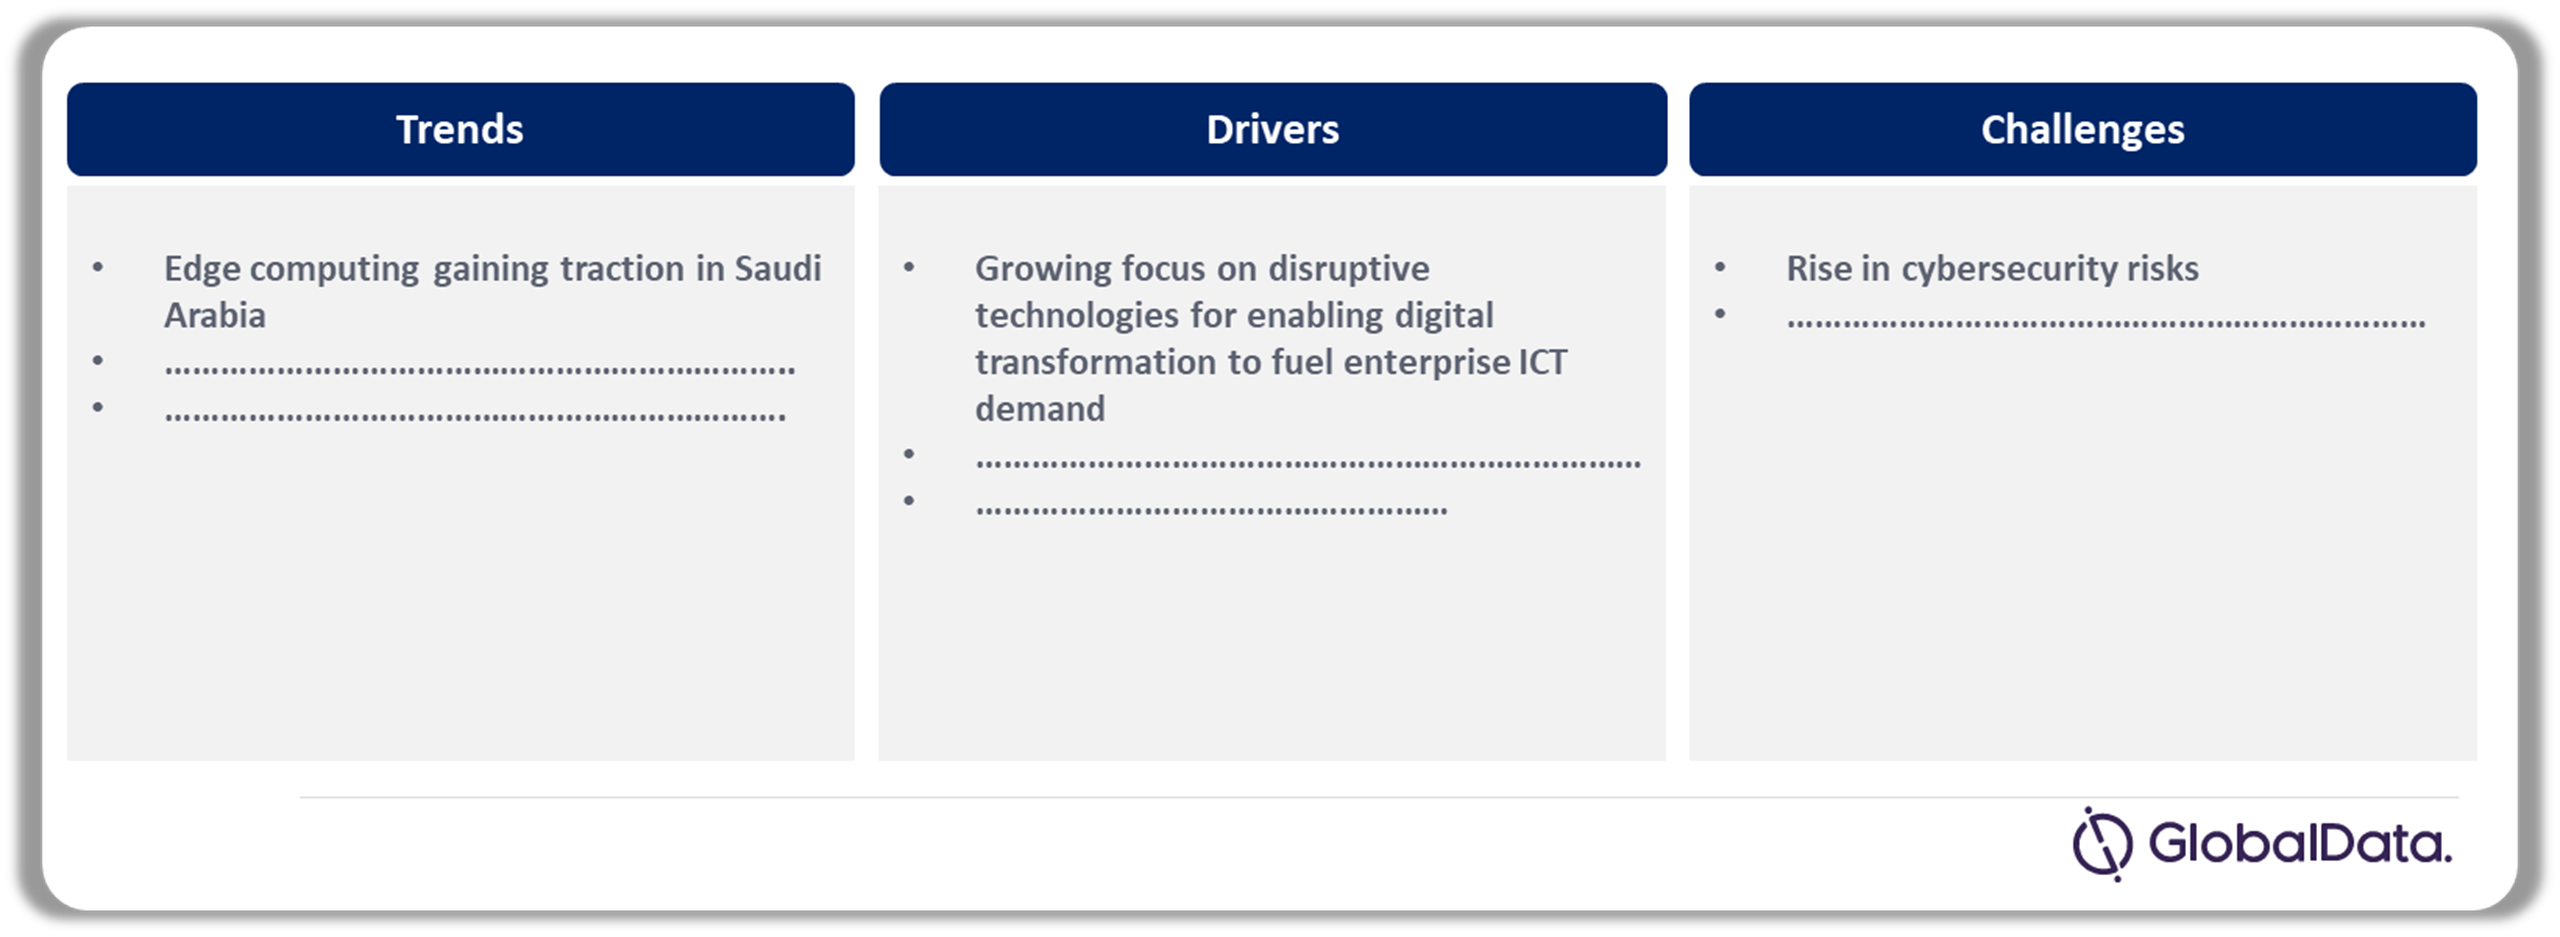 Saudi Arabia Enterprise ICT Market Dynamics – Drivers, Trends and Challenges